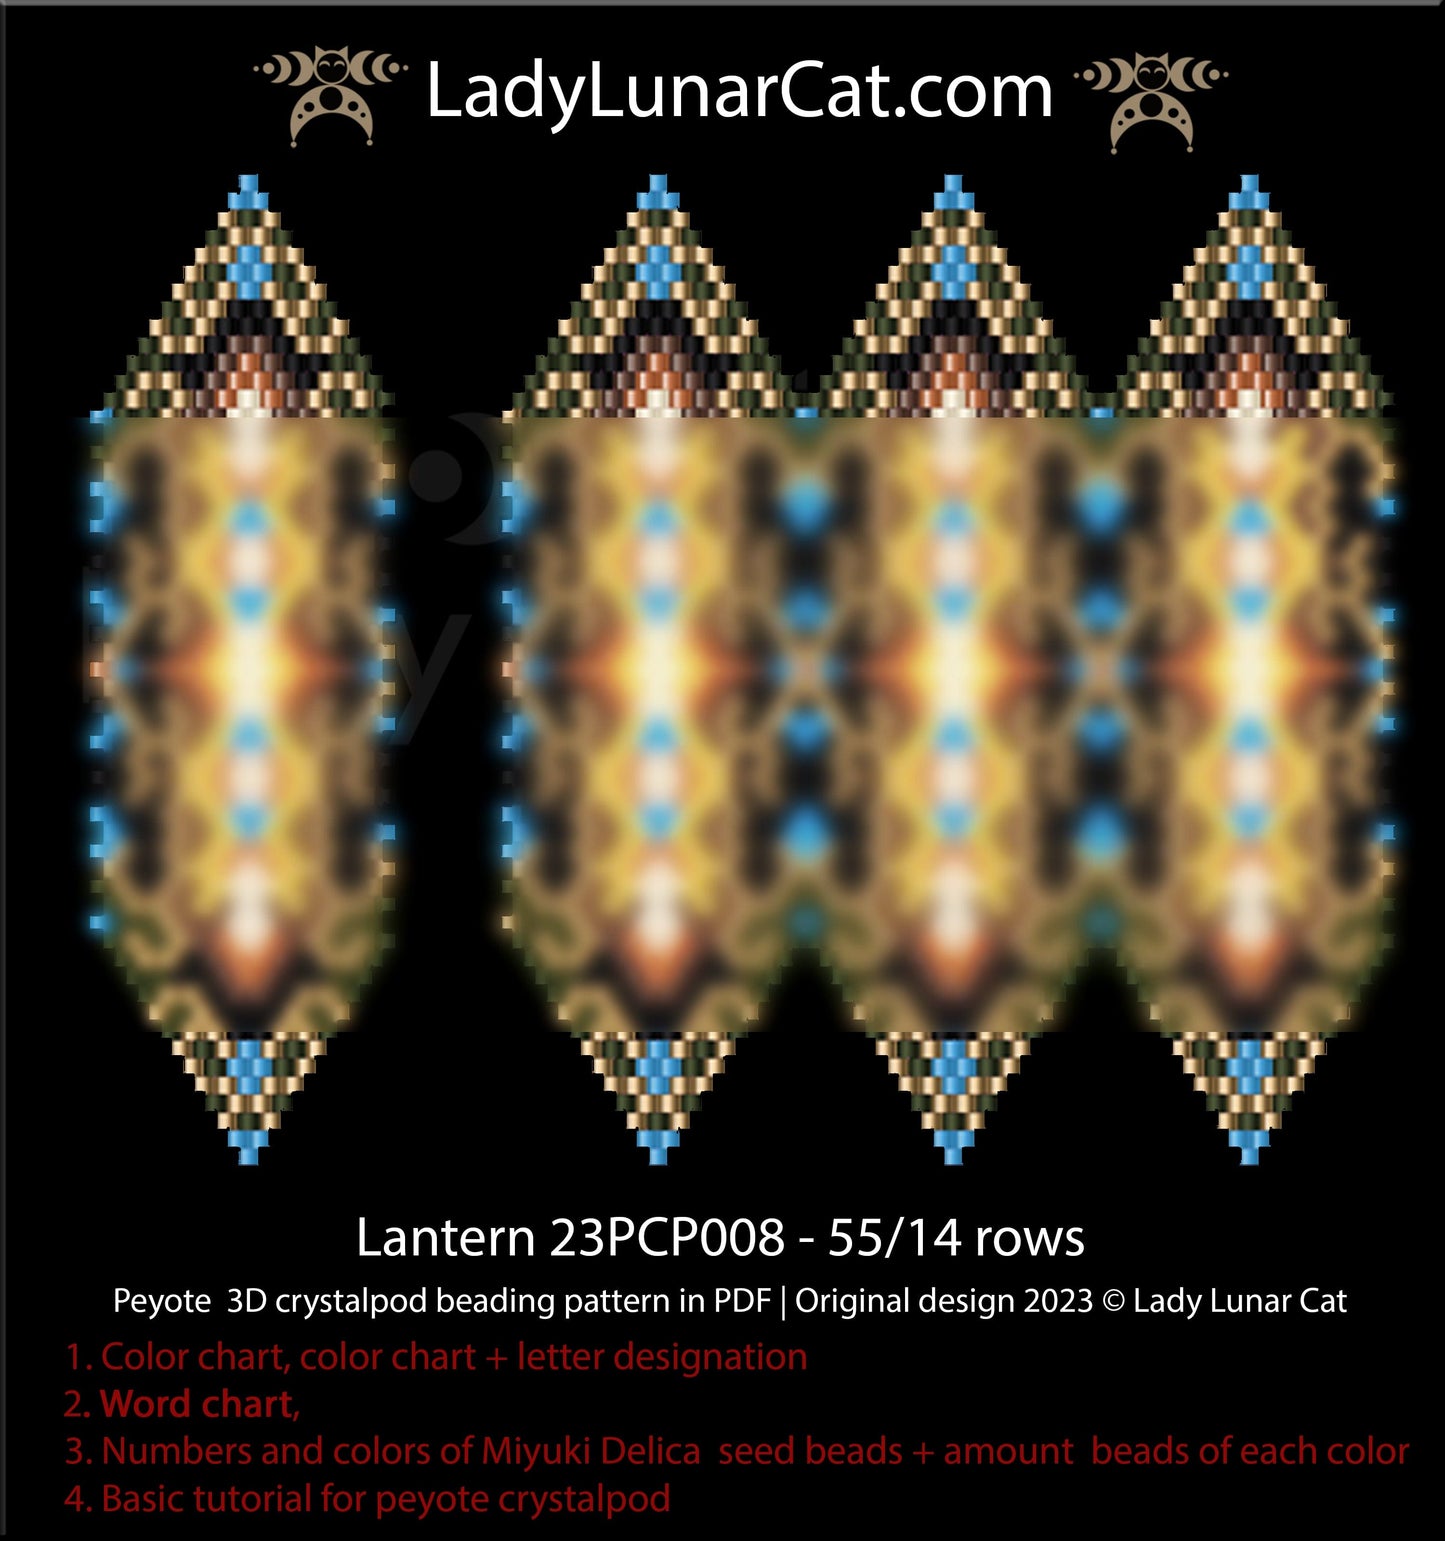 Peyote pod pattern or crystalpod pattern for beading Lantern 23PCP008 LadyLunarCat